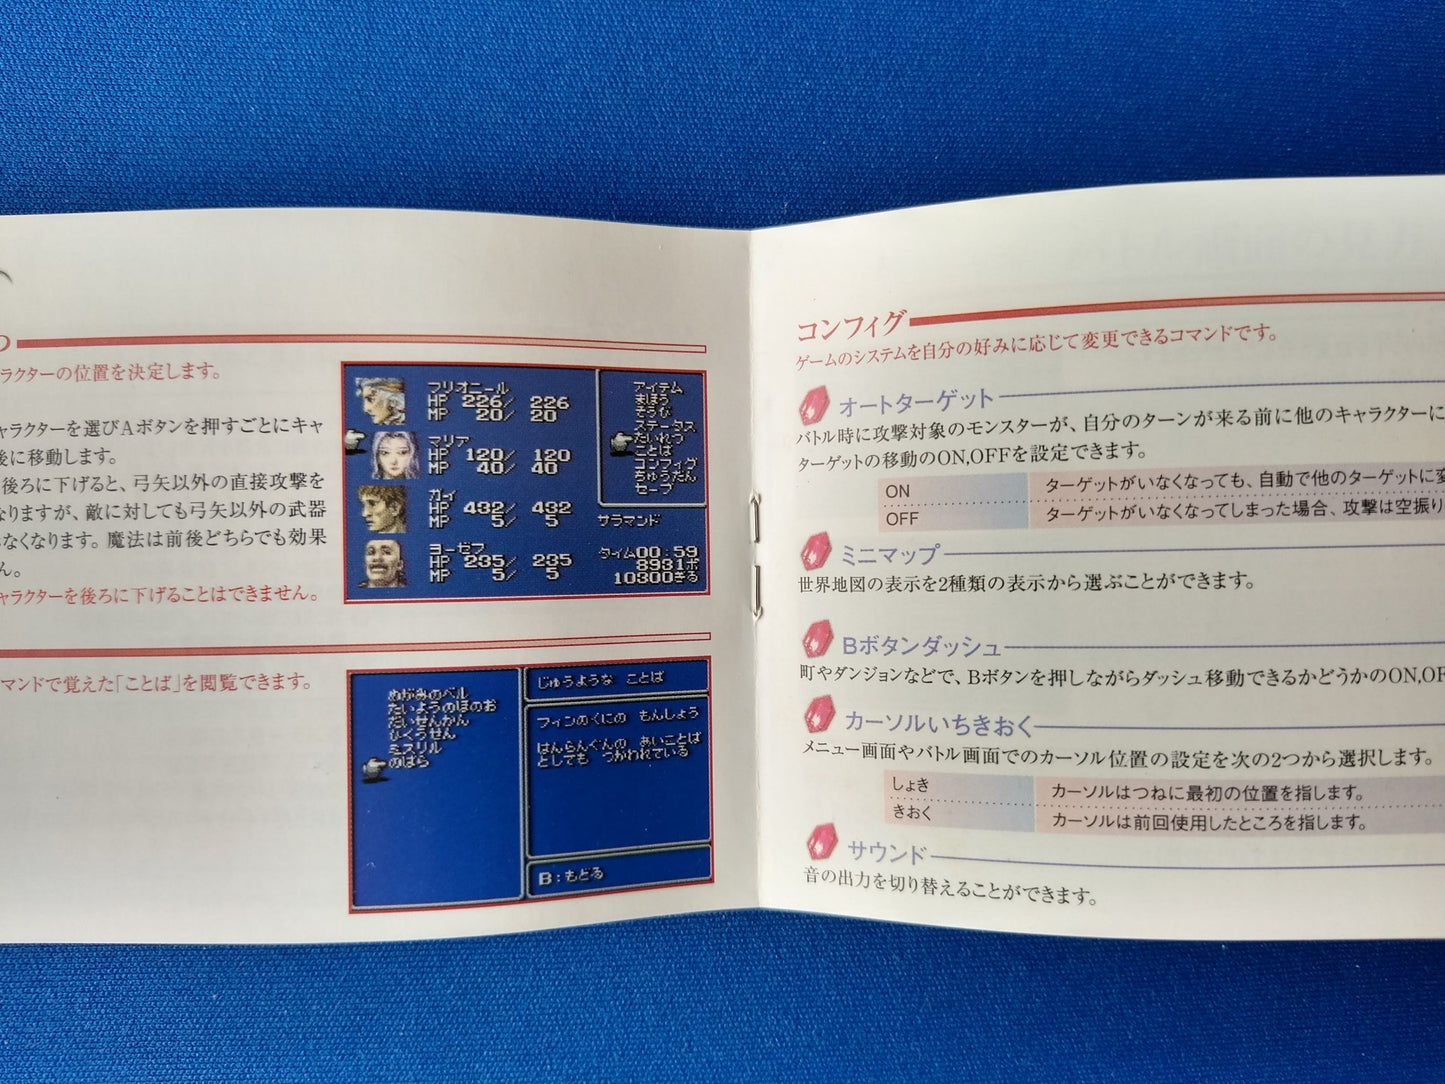 Final Fantasy 2 WonderSwan WS Cartridge, Manual, Box set, Working-e0525-